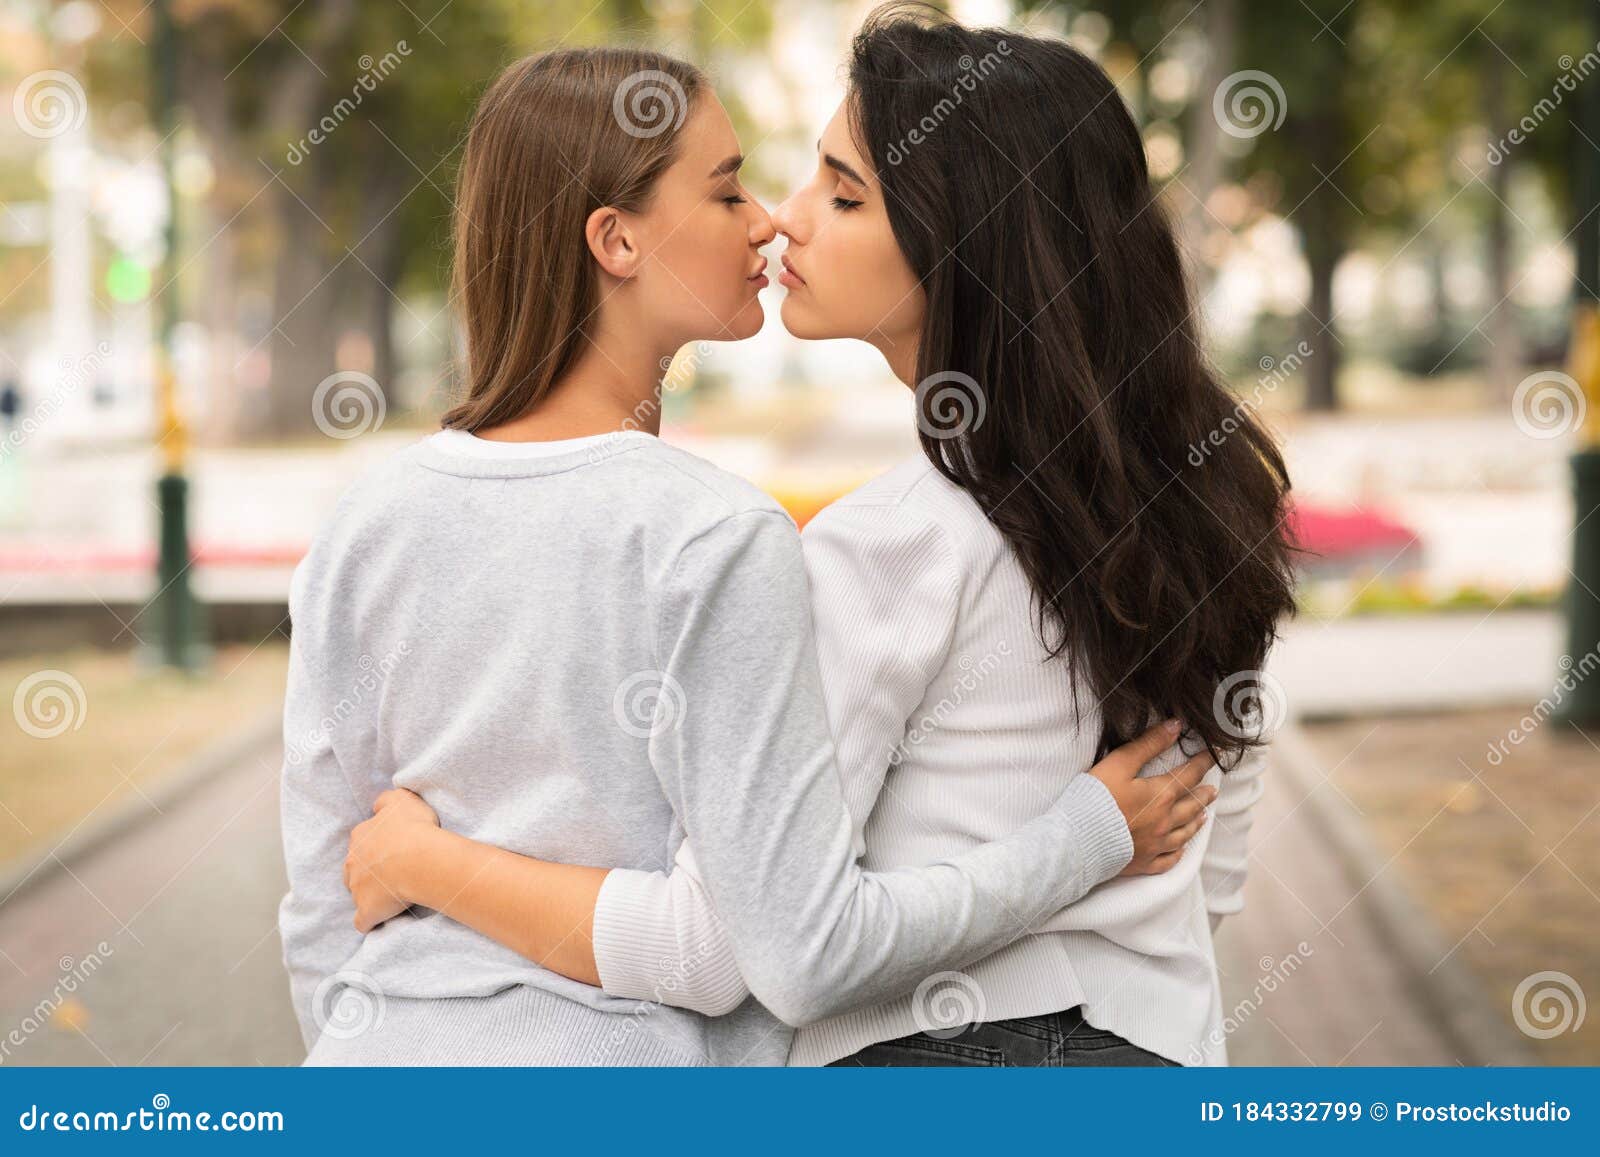 Lesbian Couple Of Girls Kissing Having Date Outdoor Back View Stock Image Image Of Kiss Feminine